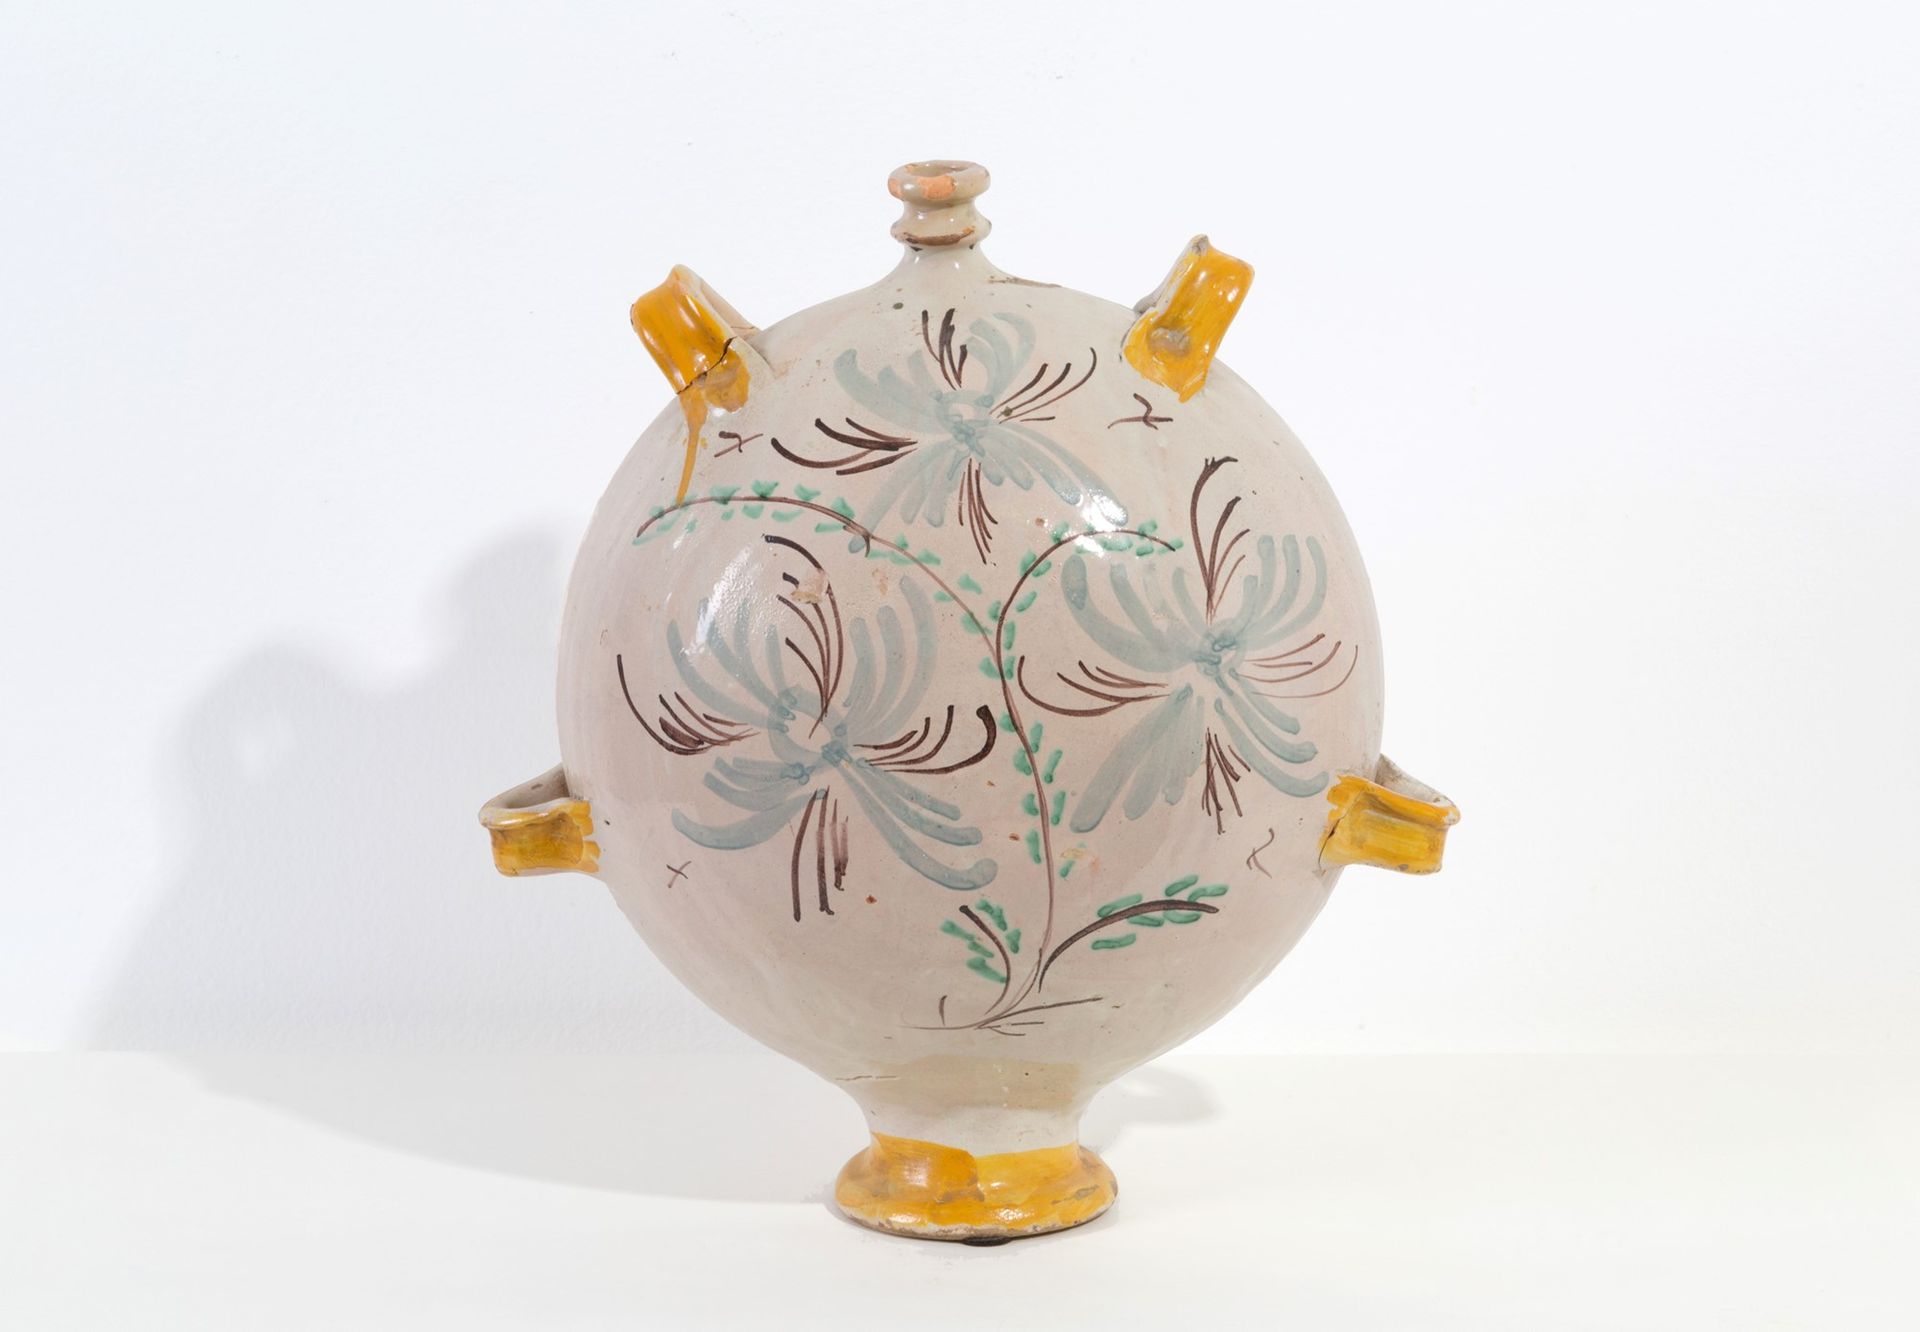 Ceramic flask 釉上彩和多色陶瓷烧瓶。意大利南部。18世纪。缺陷和裂缝。37x32x20厘米左右。